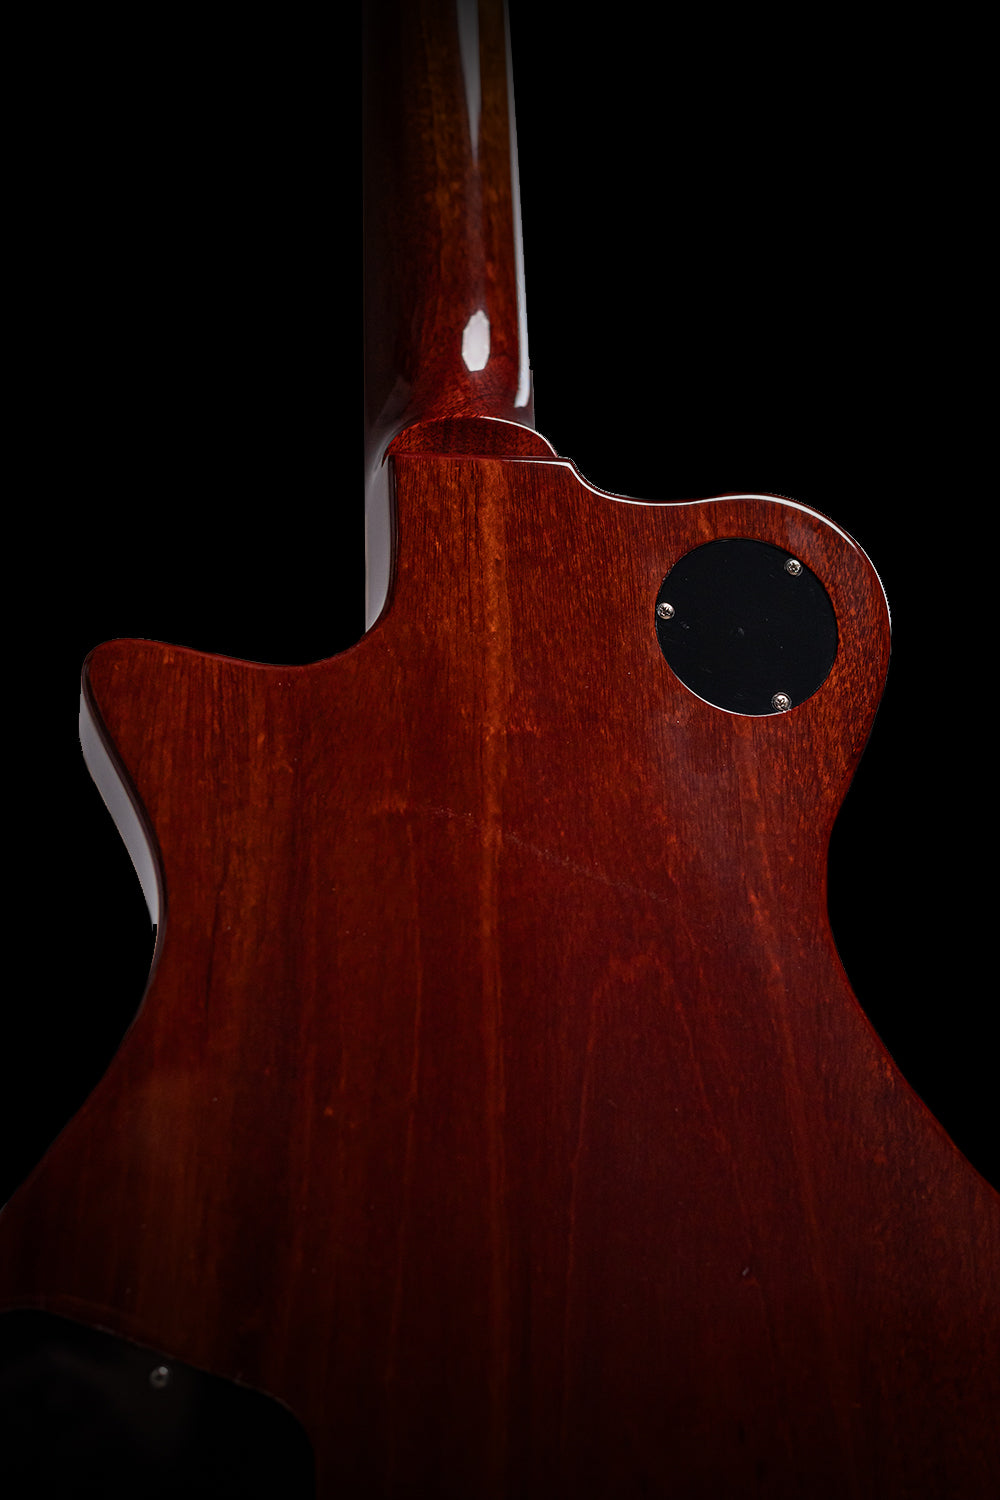 Carneglia Stallion Standard Electric Guitar with Brazilian Rosewood - Tobacco Sunburst